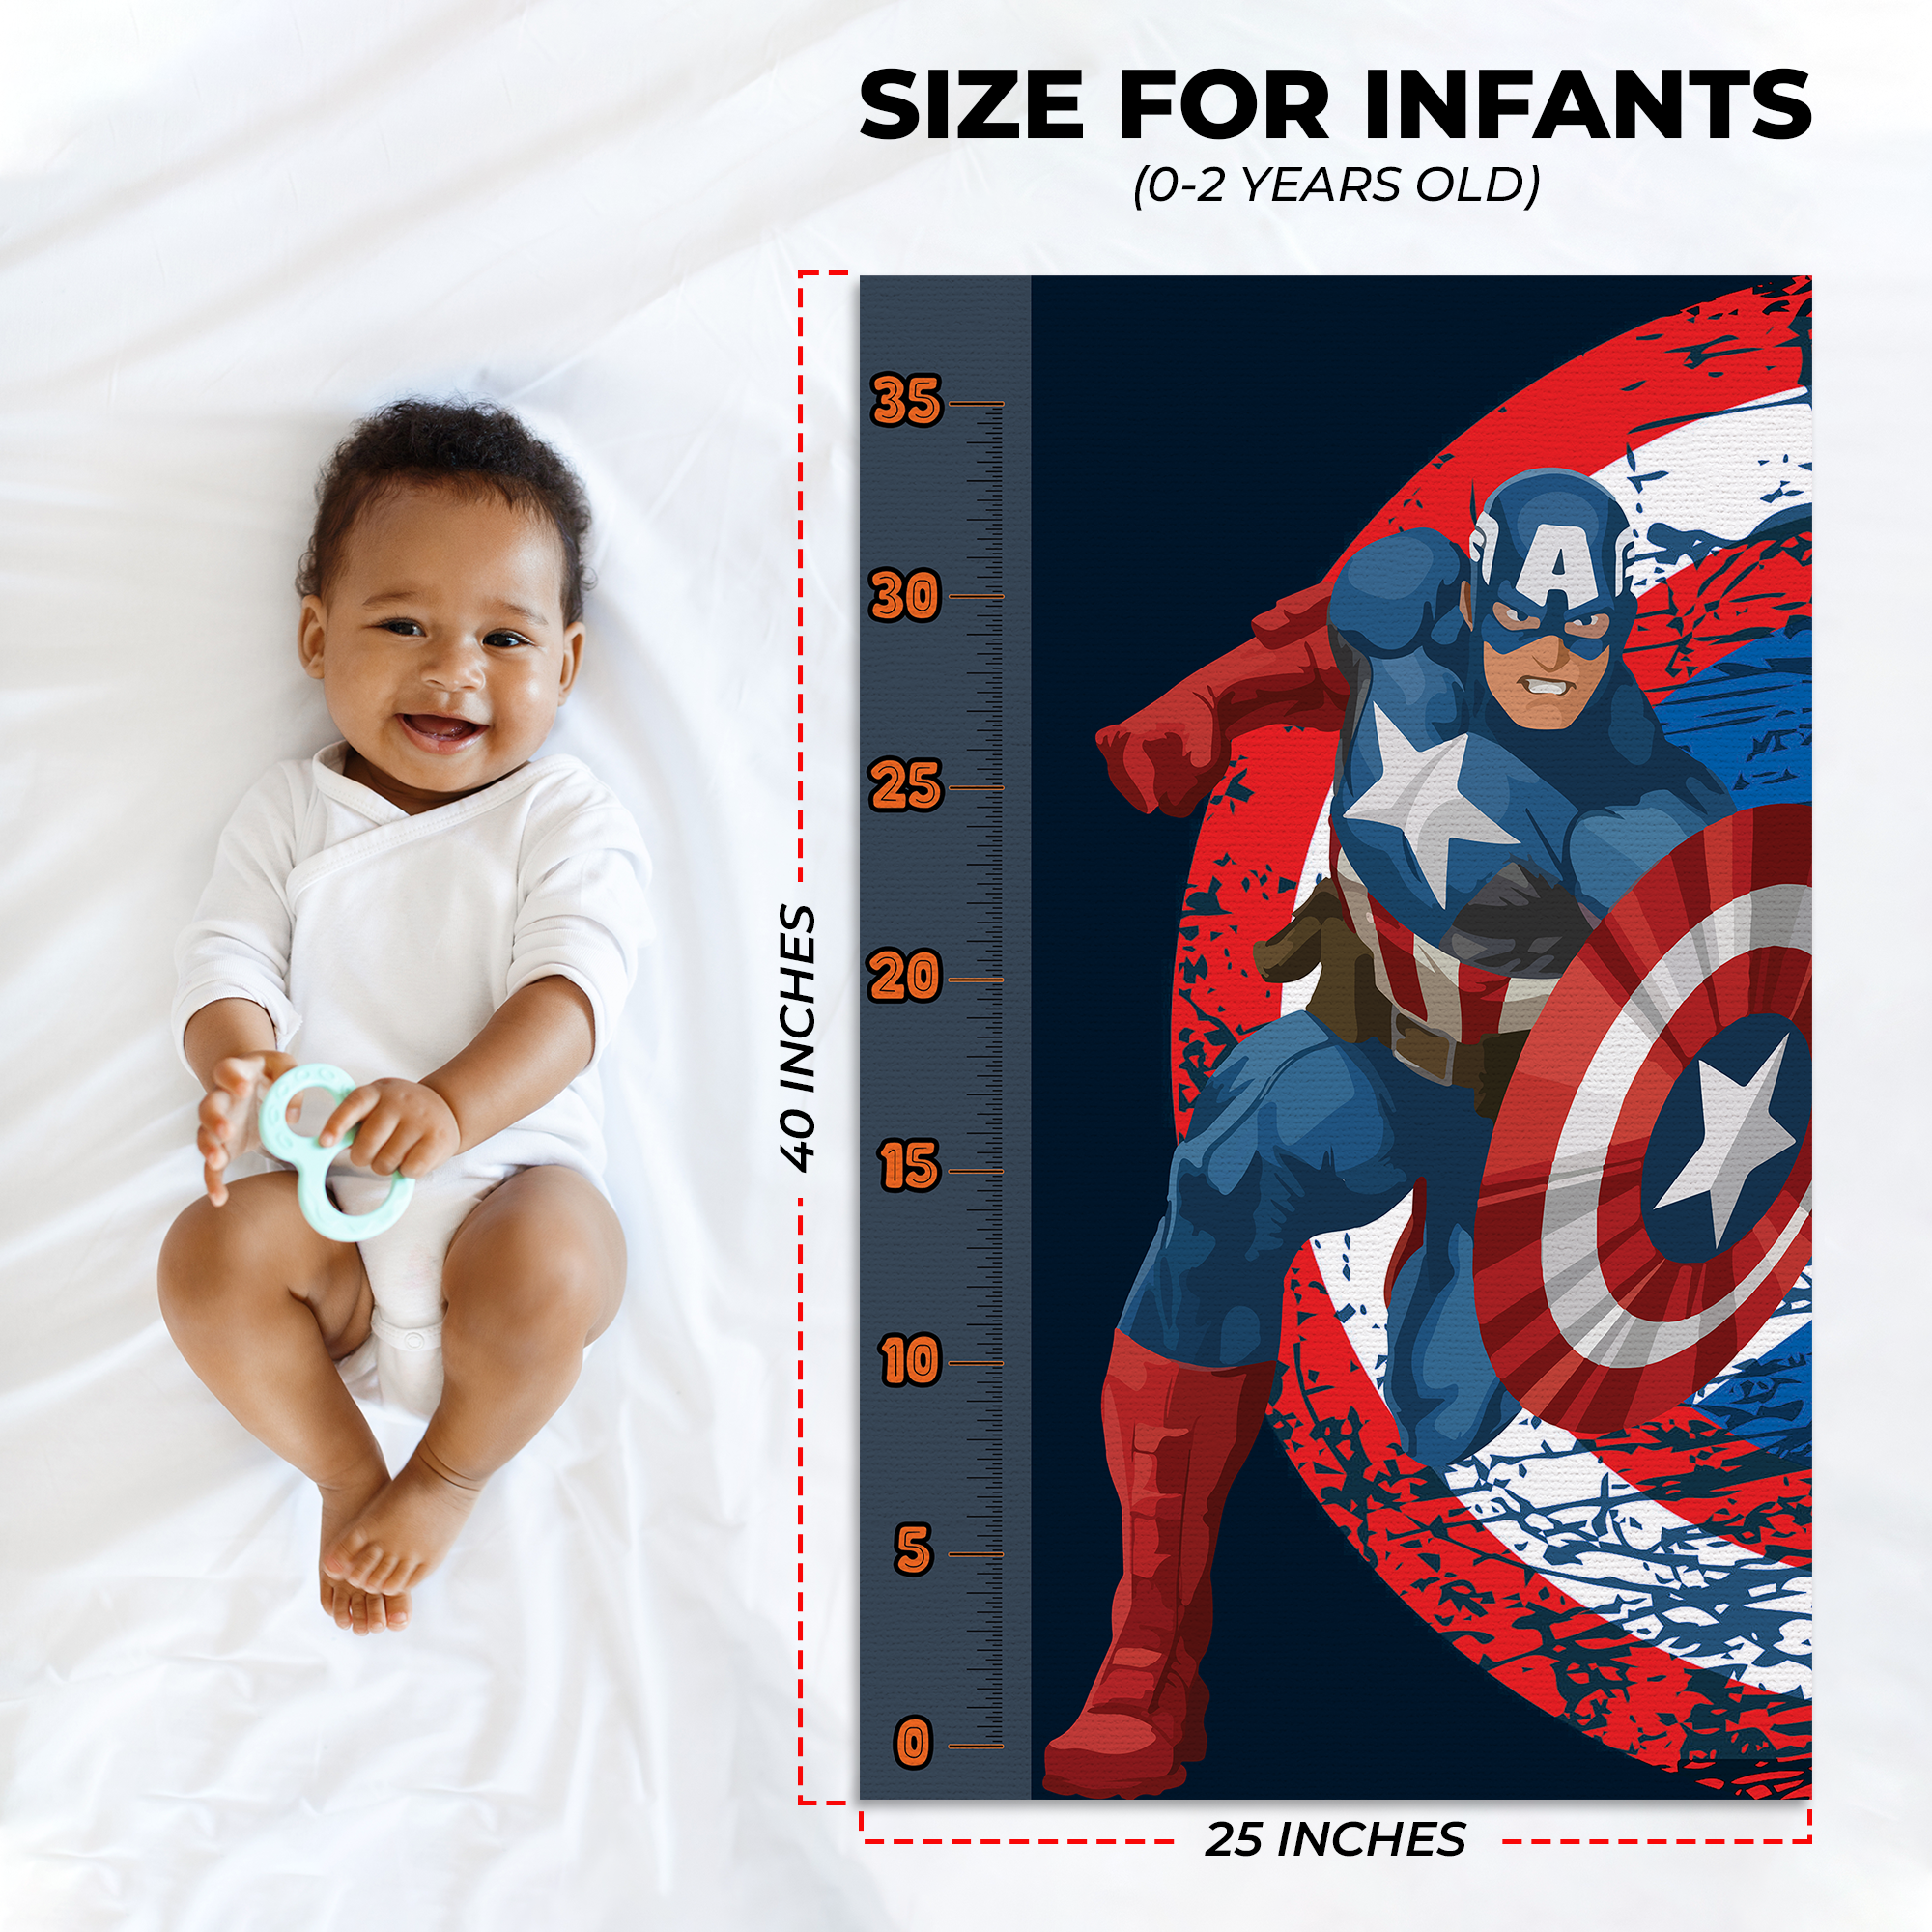 Cap America Infant Growth Chart